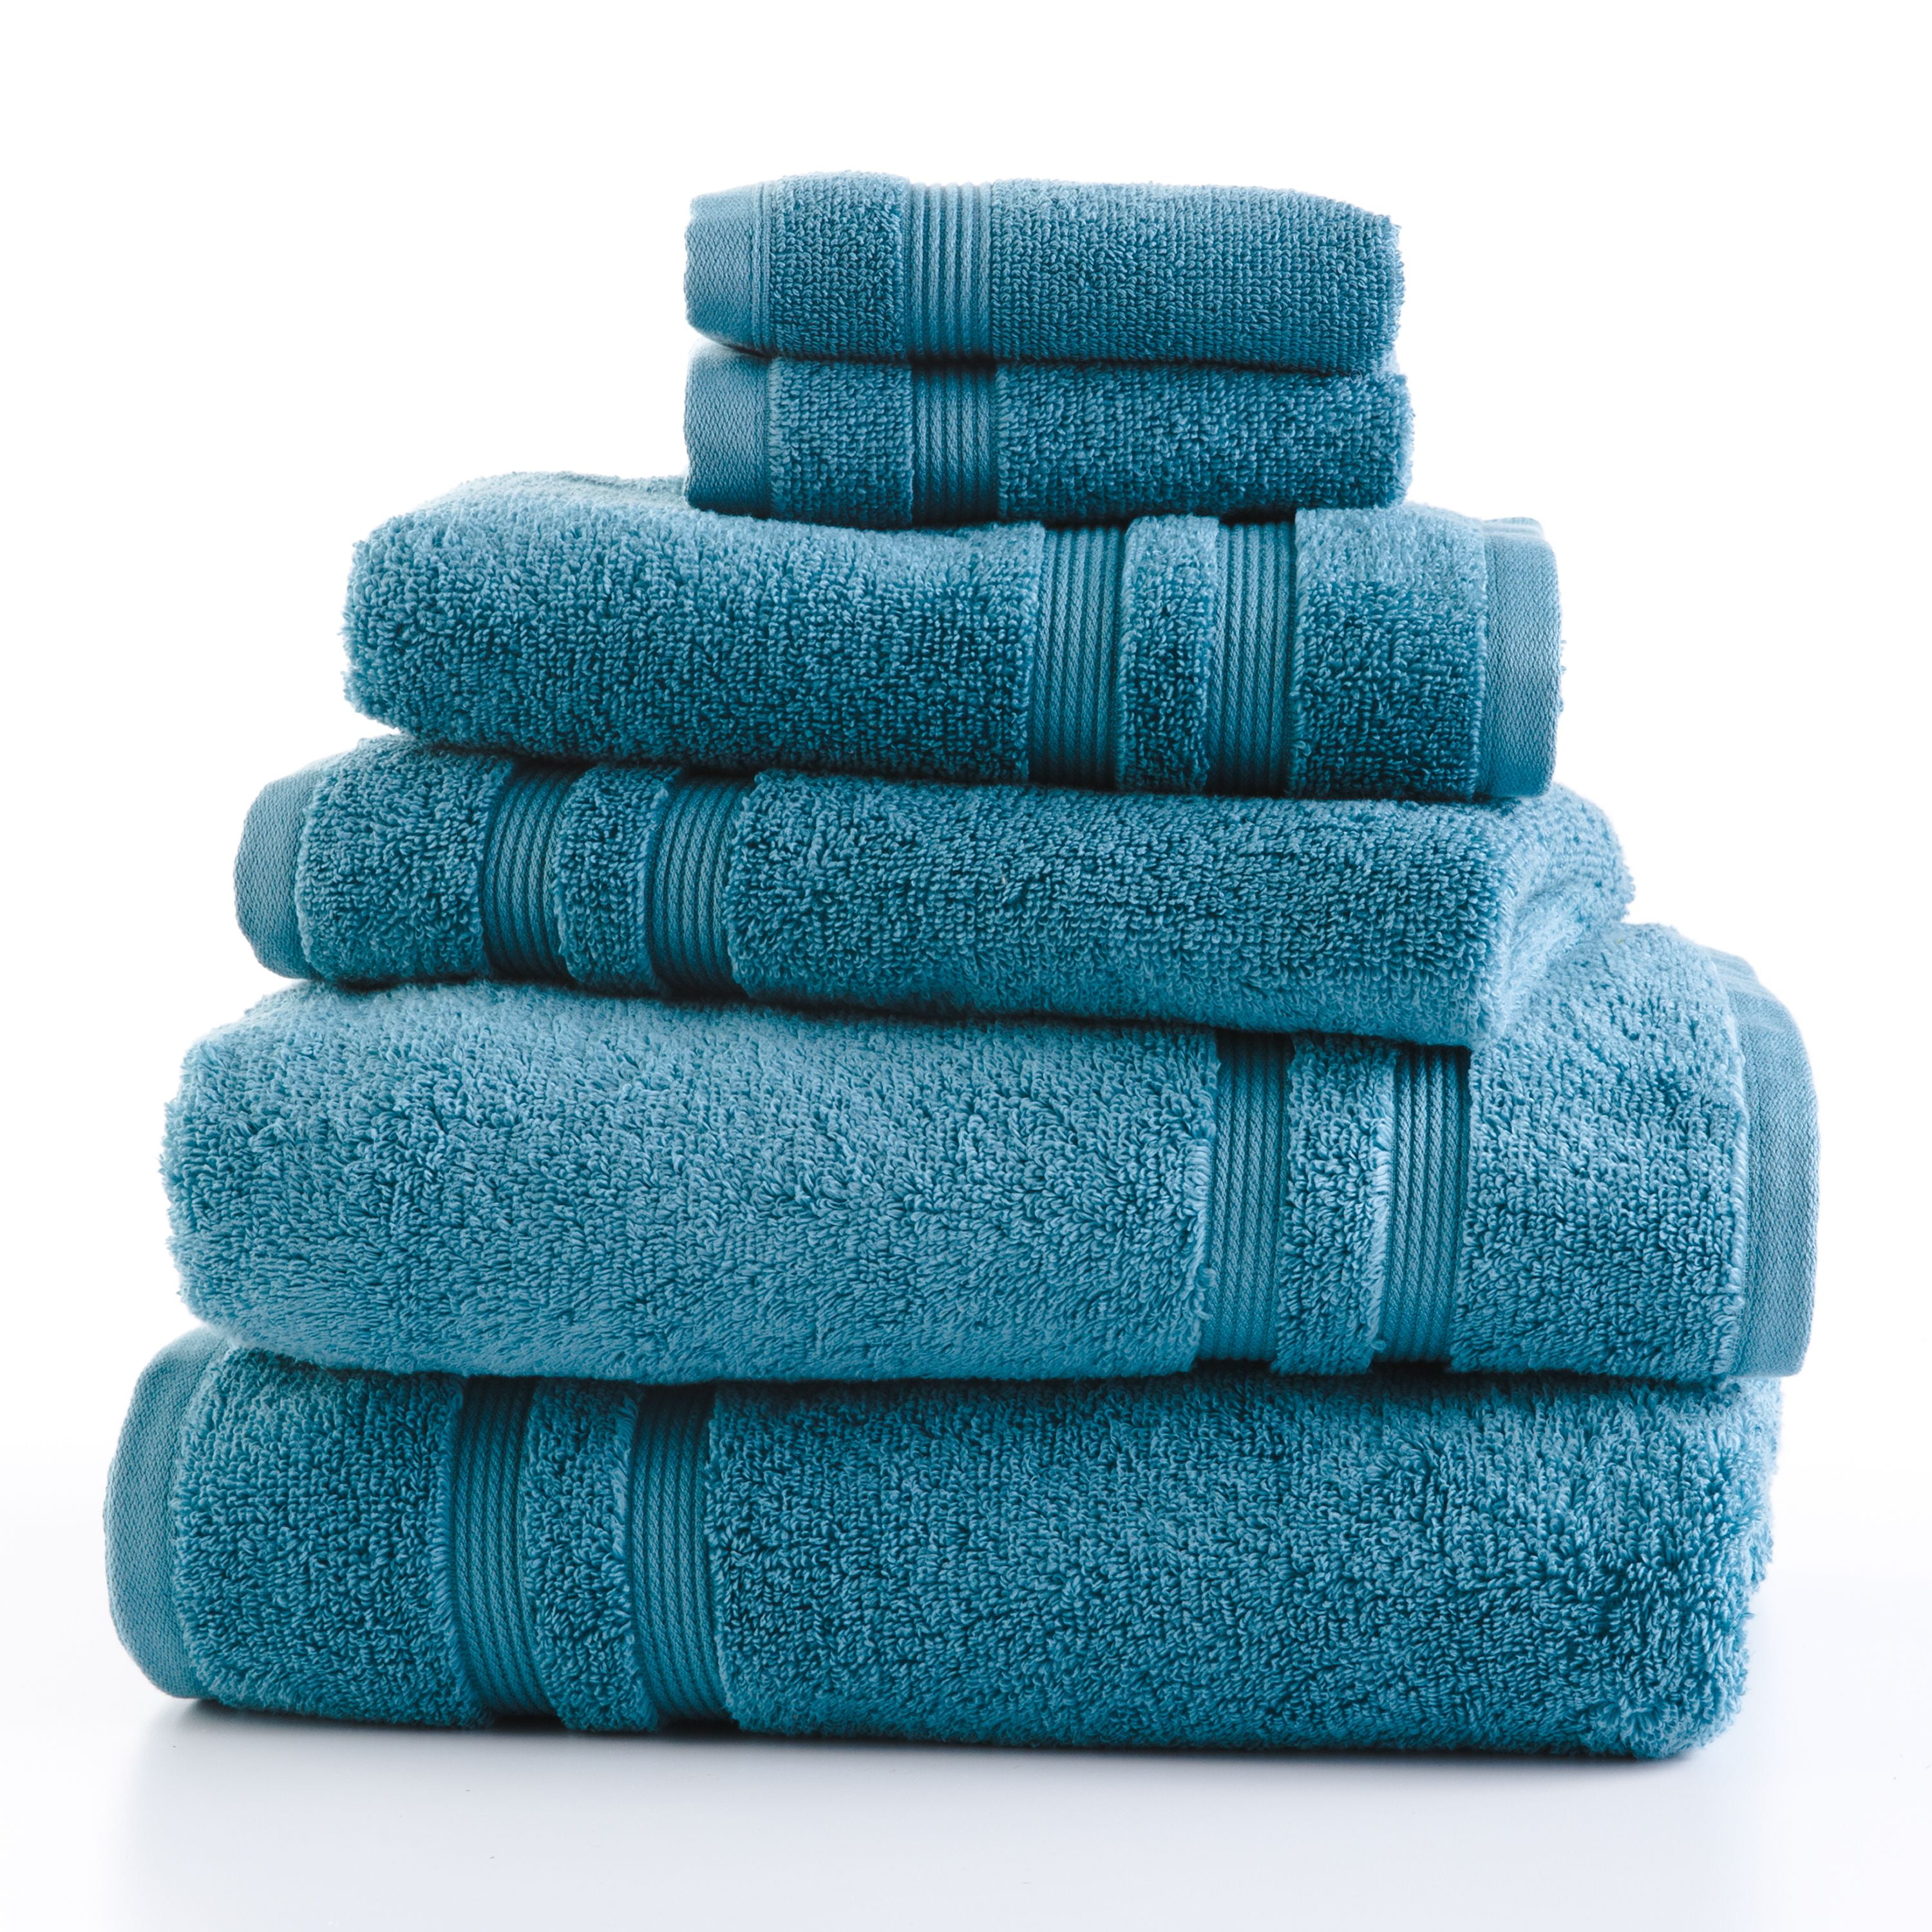 6*Pcs/Set Xiaomi One-time Compressed Cotton Towel Disposable Antibacteria Towels 